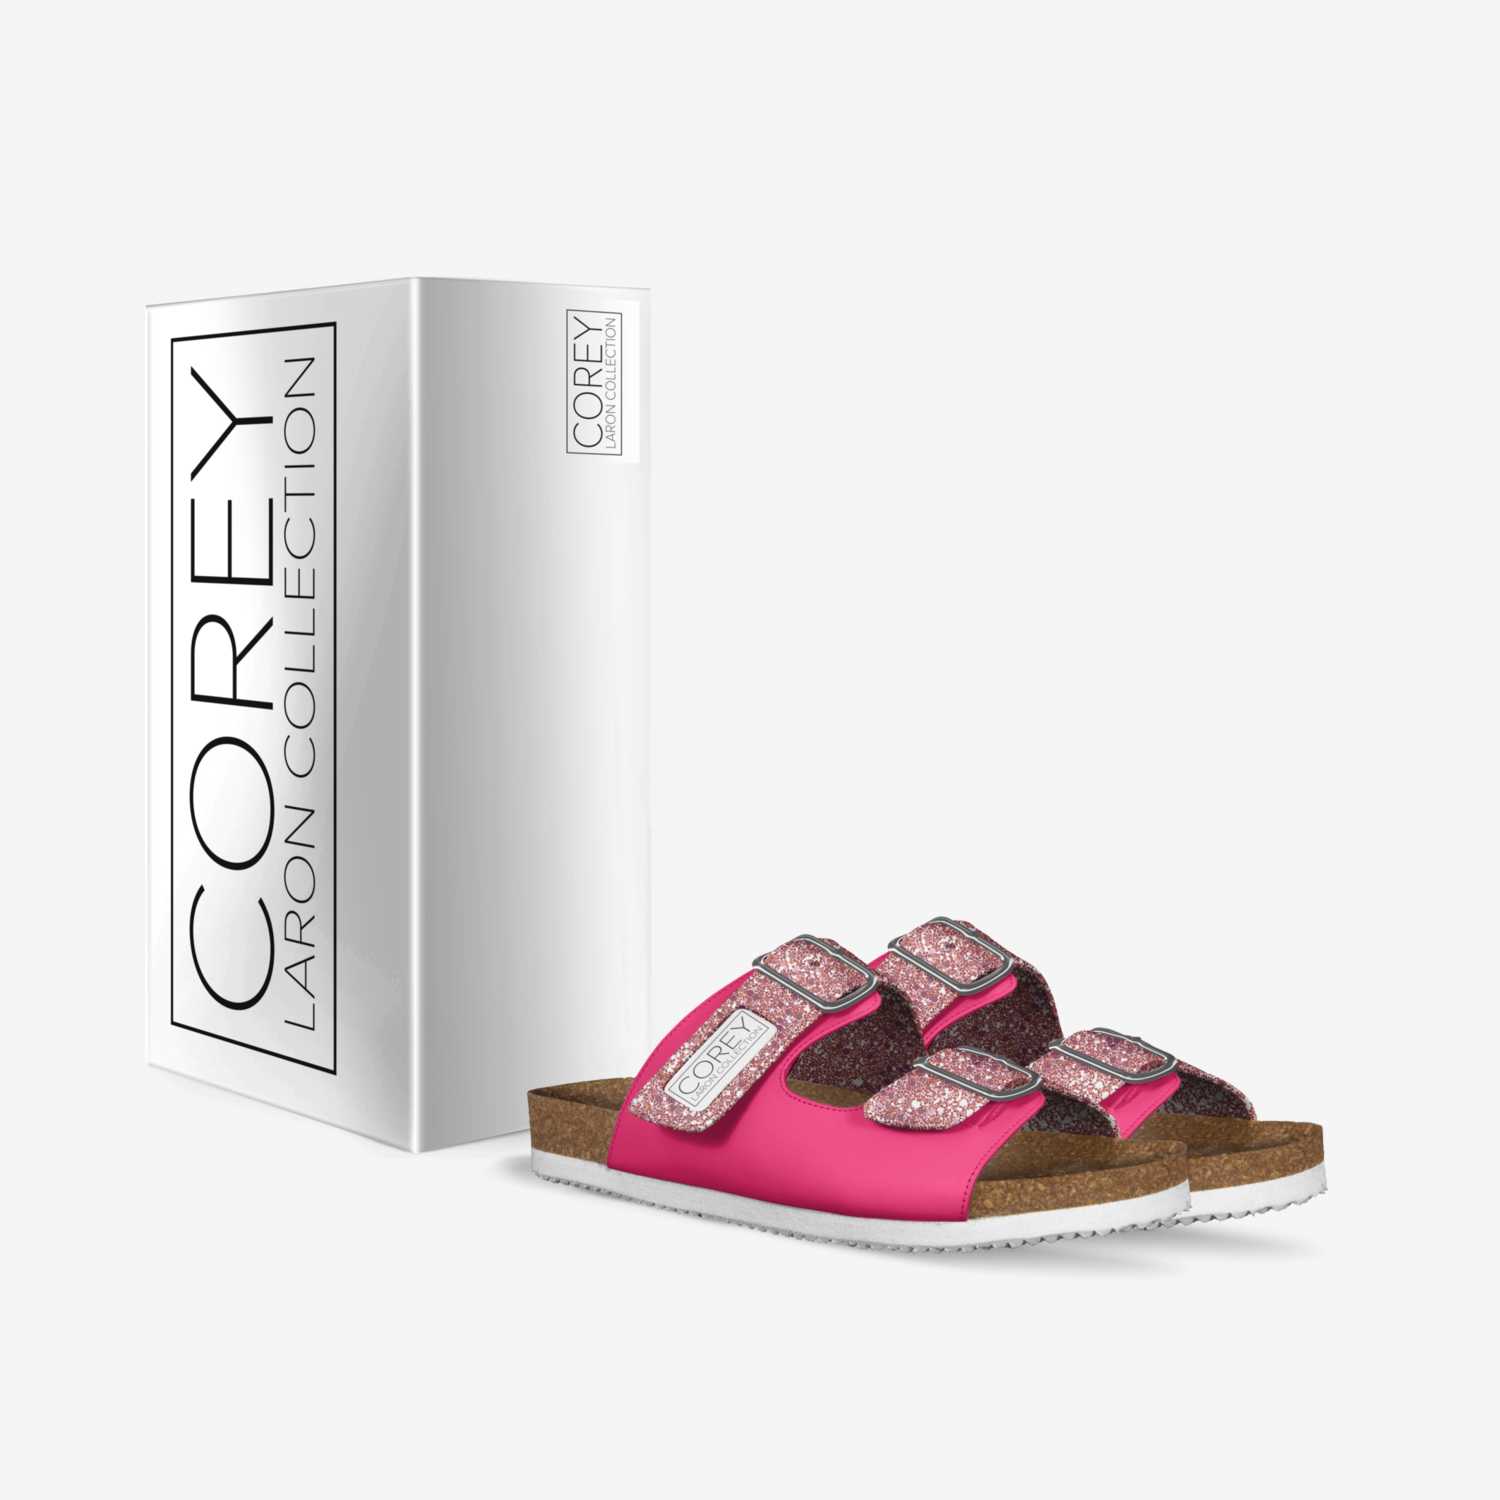 Corey Laron 6 custom made in Italy shoes by Corey Laron Hoskins Jr | Box view